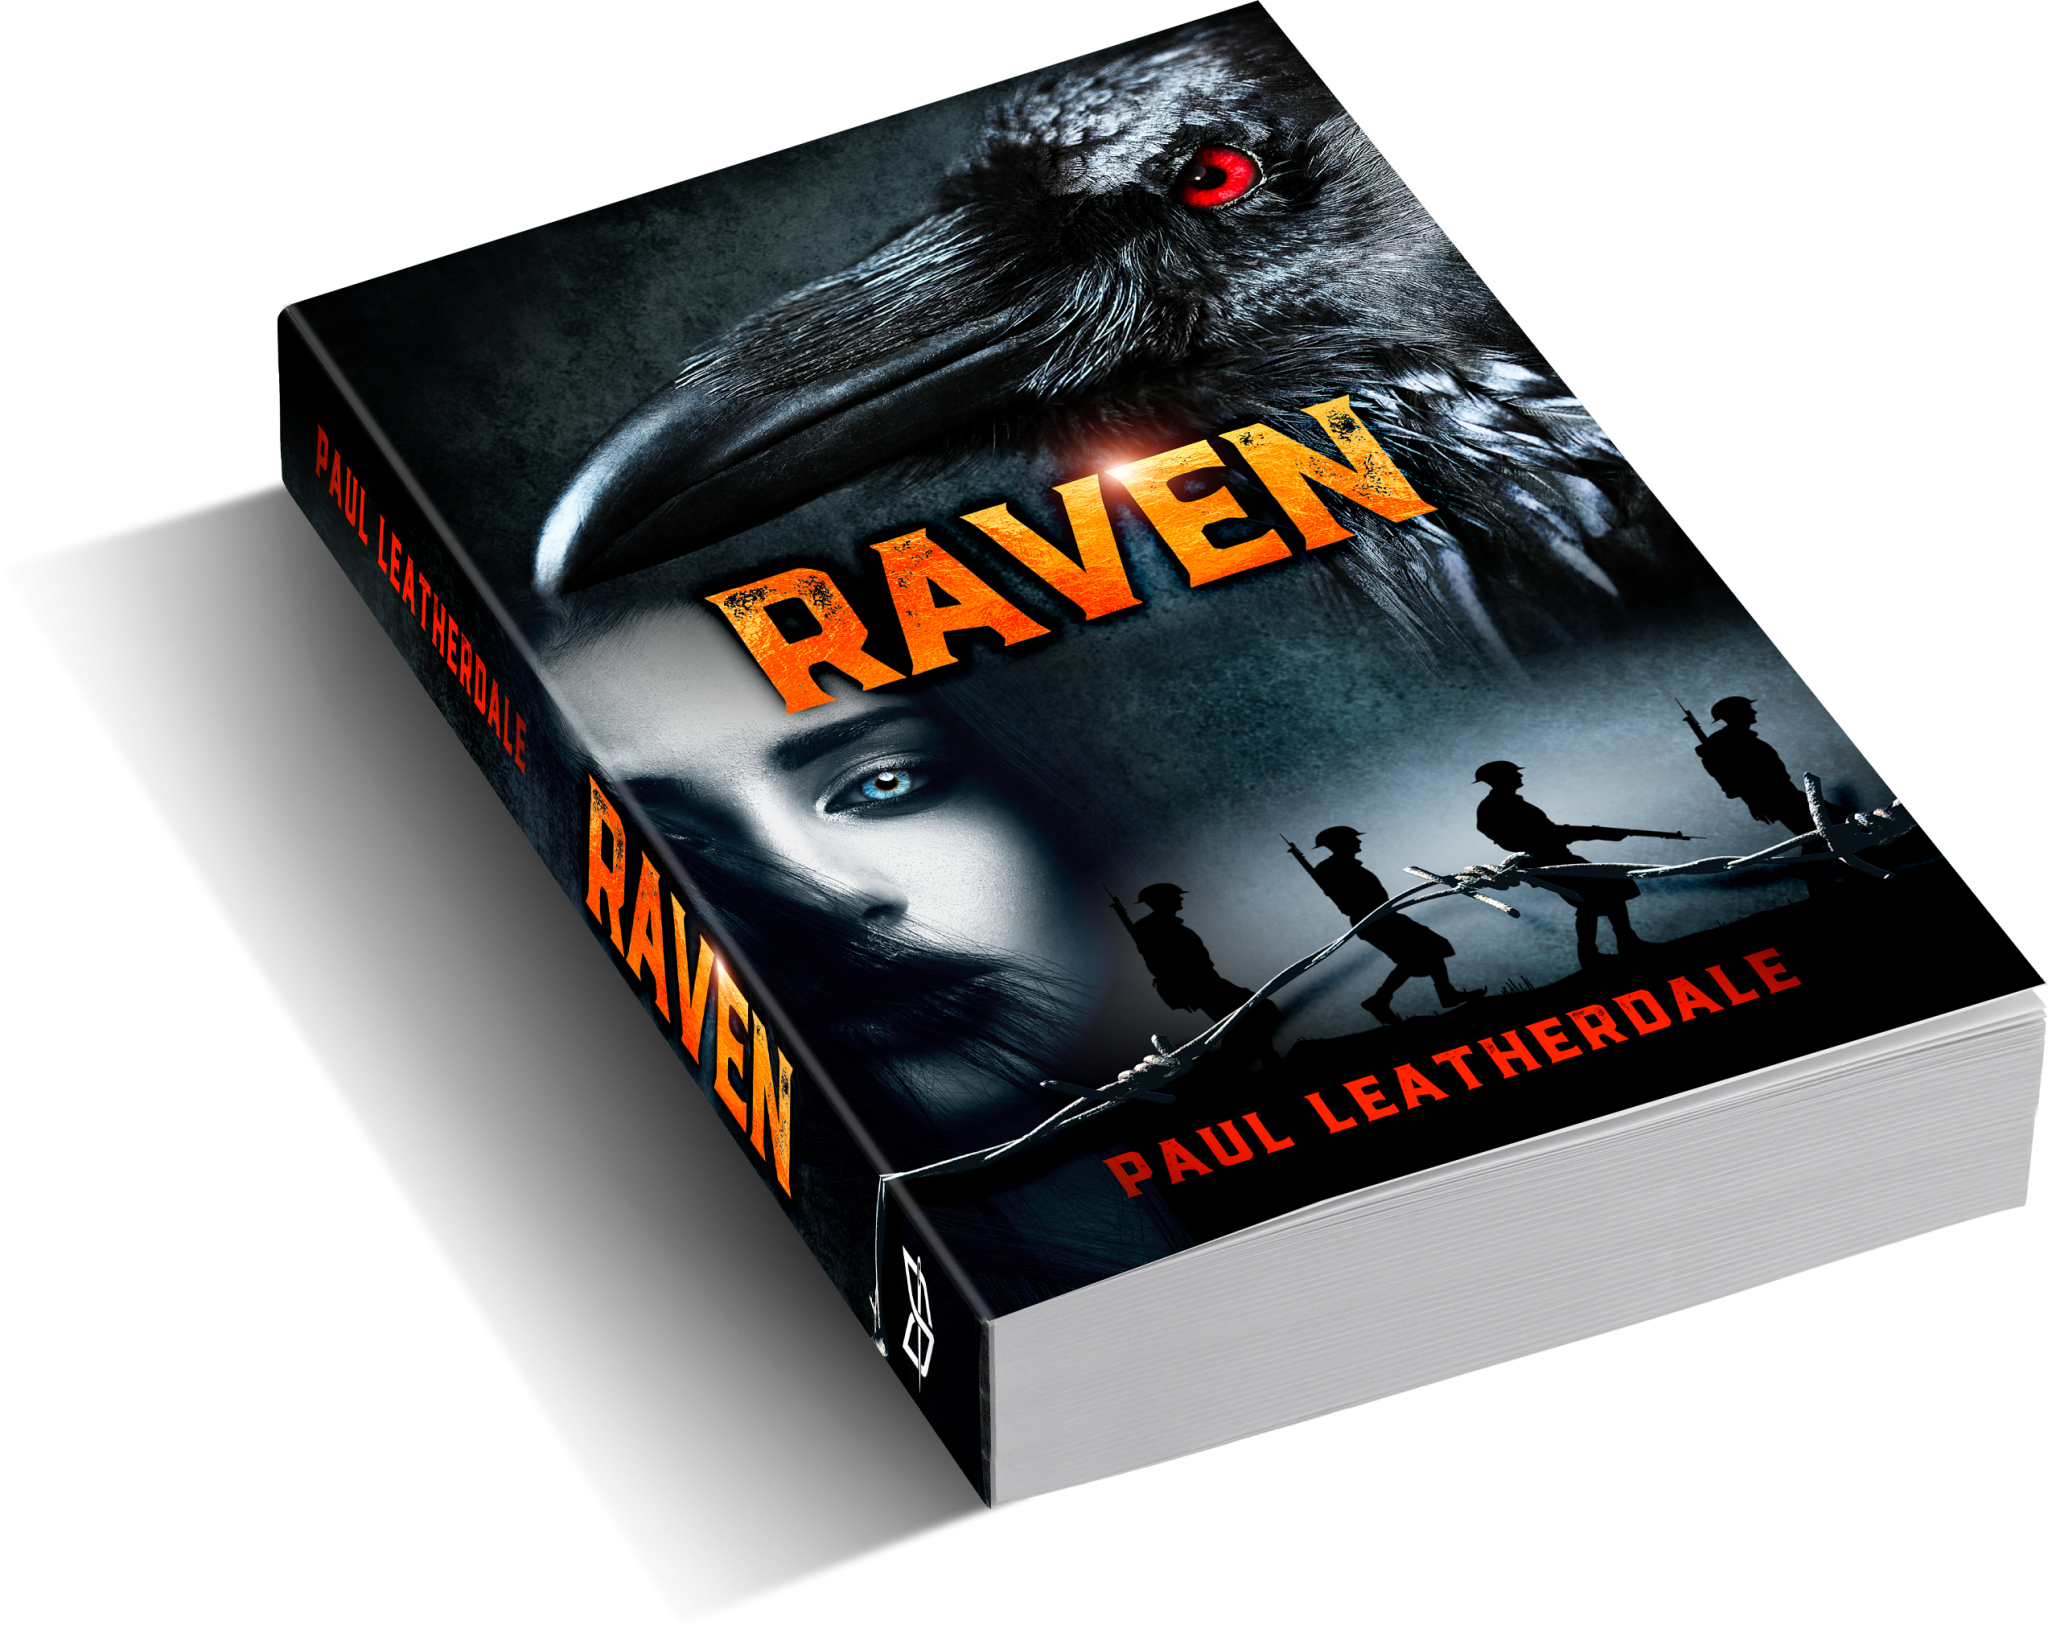 Raven by Paul Leatherdale